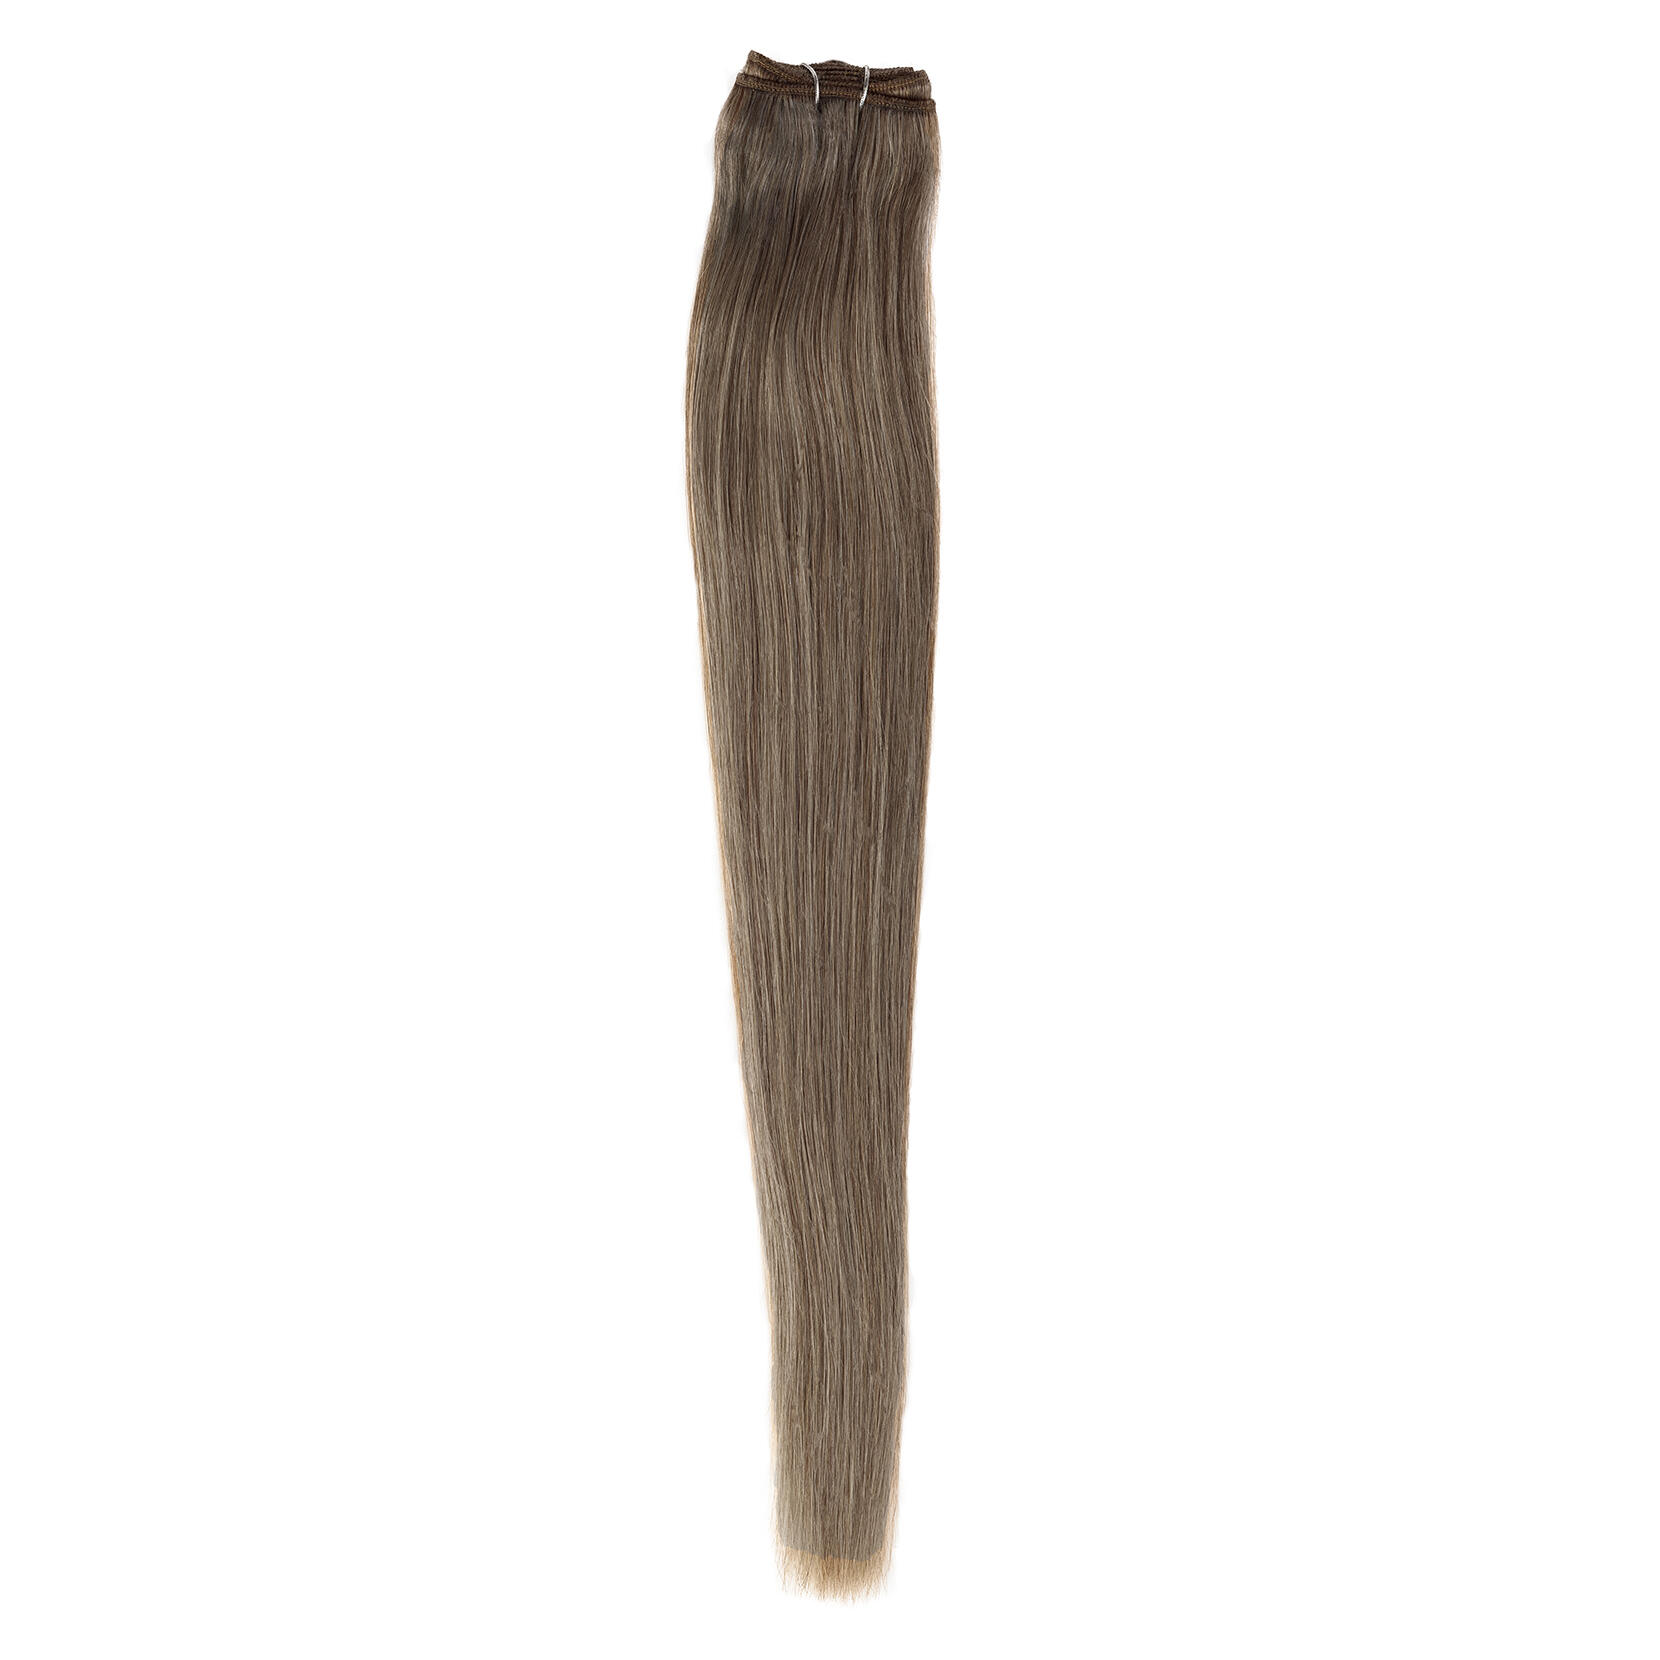 Hair Weft Premium 7.3 Cendre Ash 50 cm